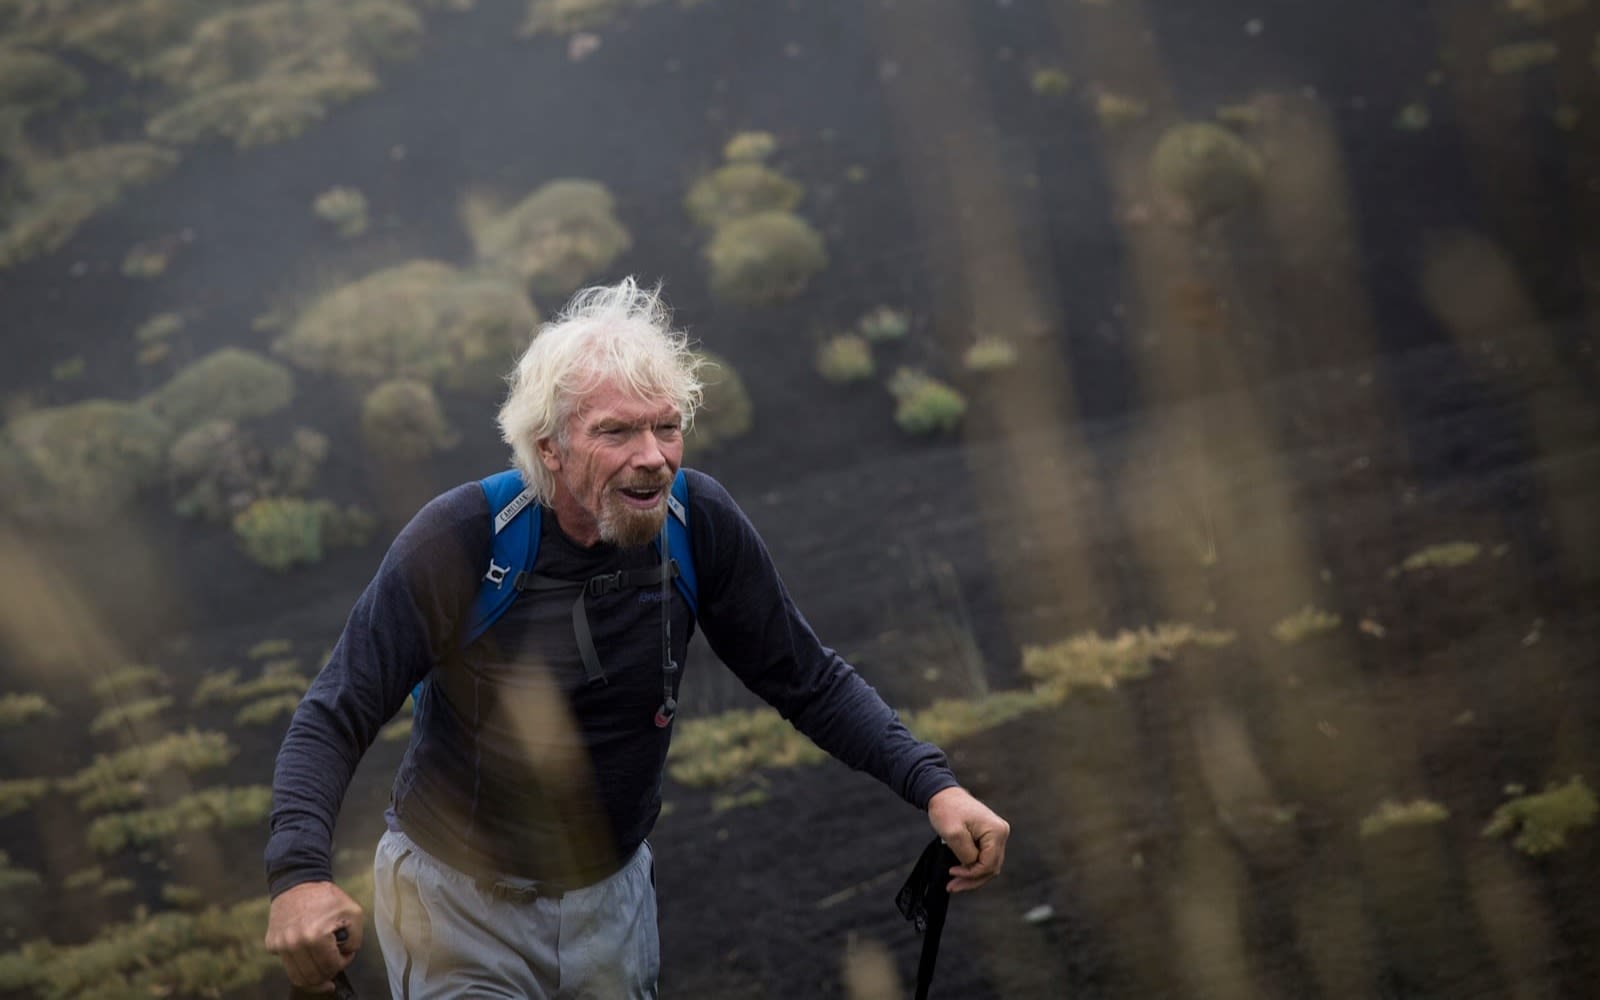 Richard Branson hiking on the Strive Challenge